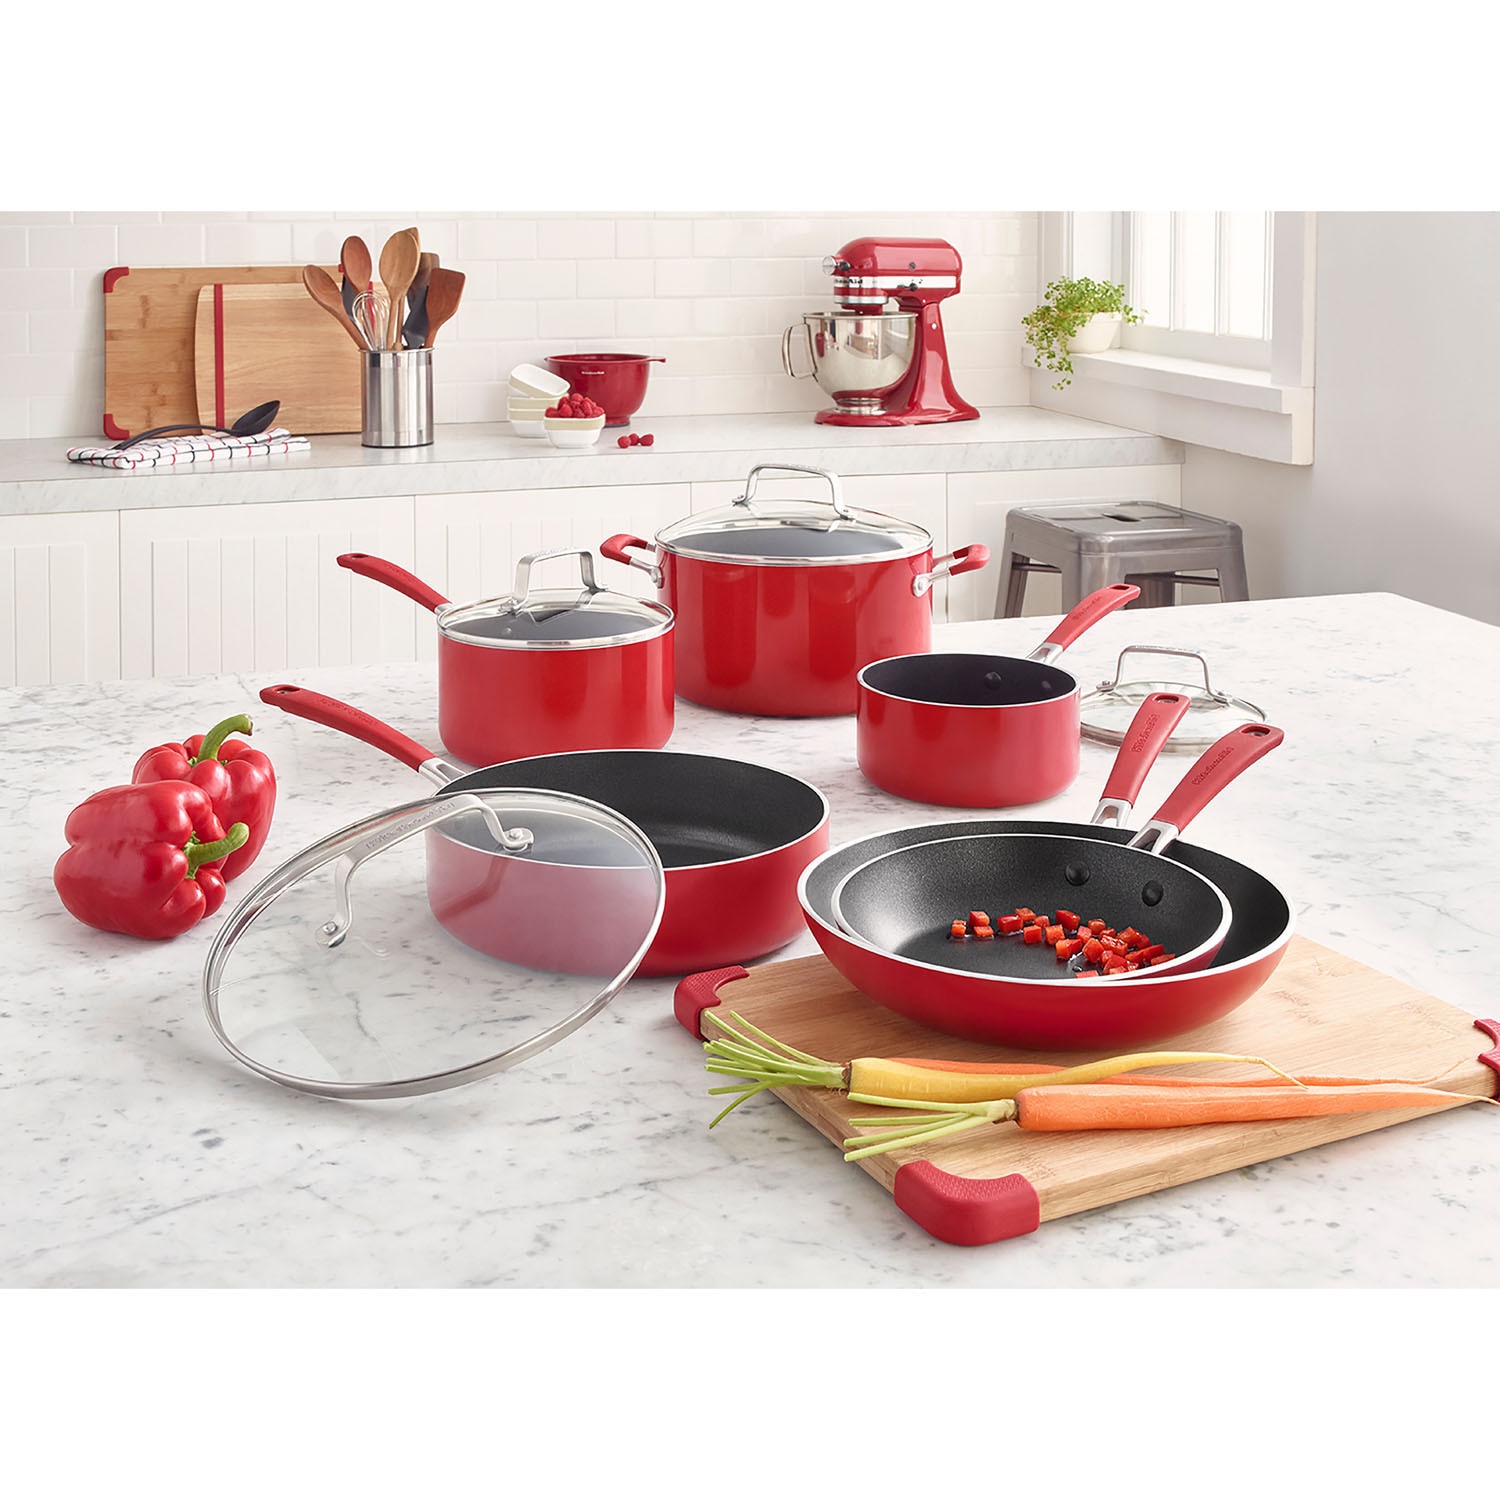 https://ak1.ostkcdn.com/images/products/14341704/KitchenAid-Aluminum-Nonstick-10-Piece-Cookware-Set-in-Empire-Red-cc4eef4b-8c31-4177-b17d-6c7e6c9e2ca9.jpg